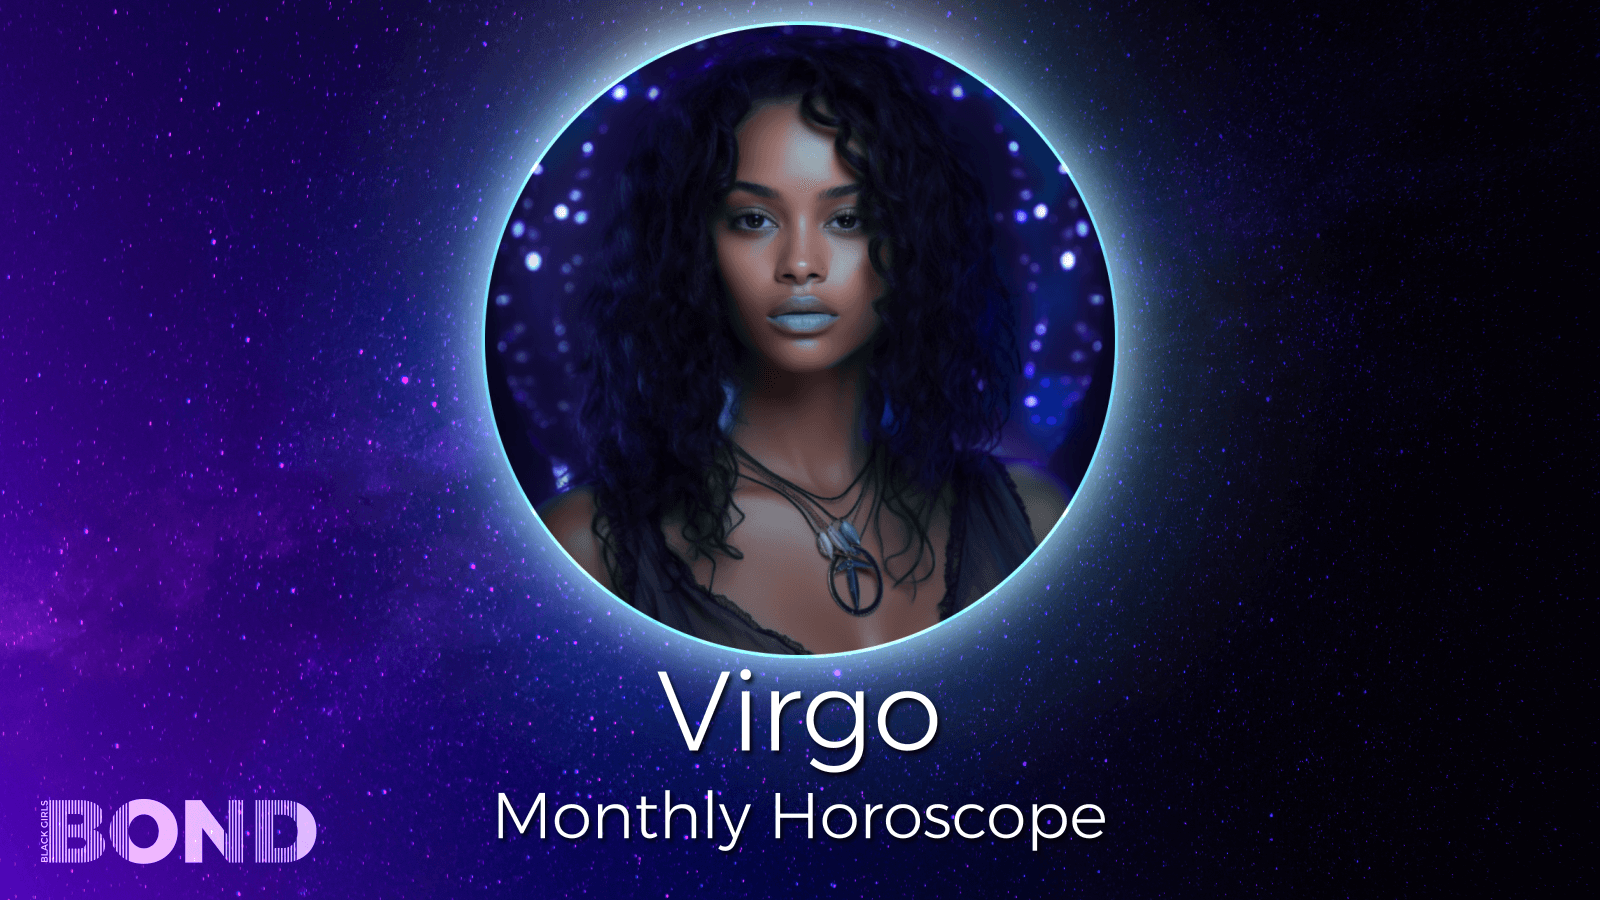 Virgo November Horoscope: Embracing Challenges with Wisdom